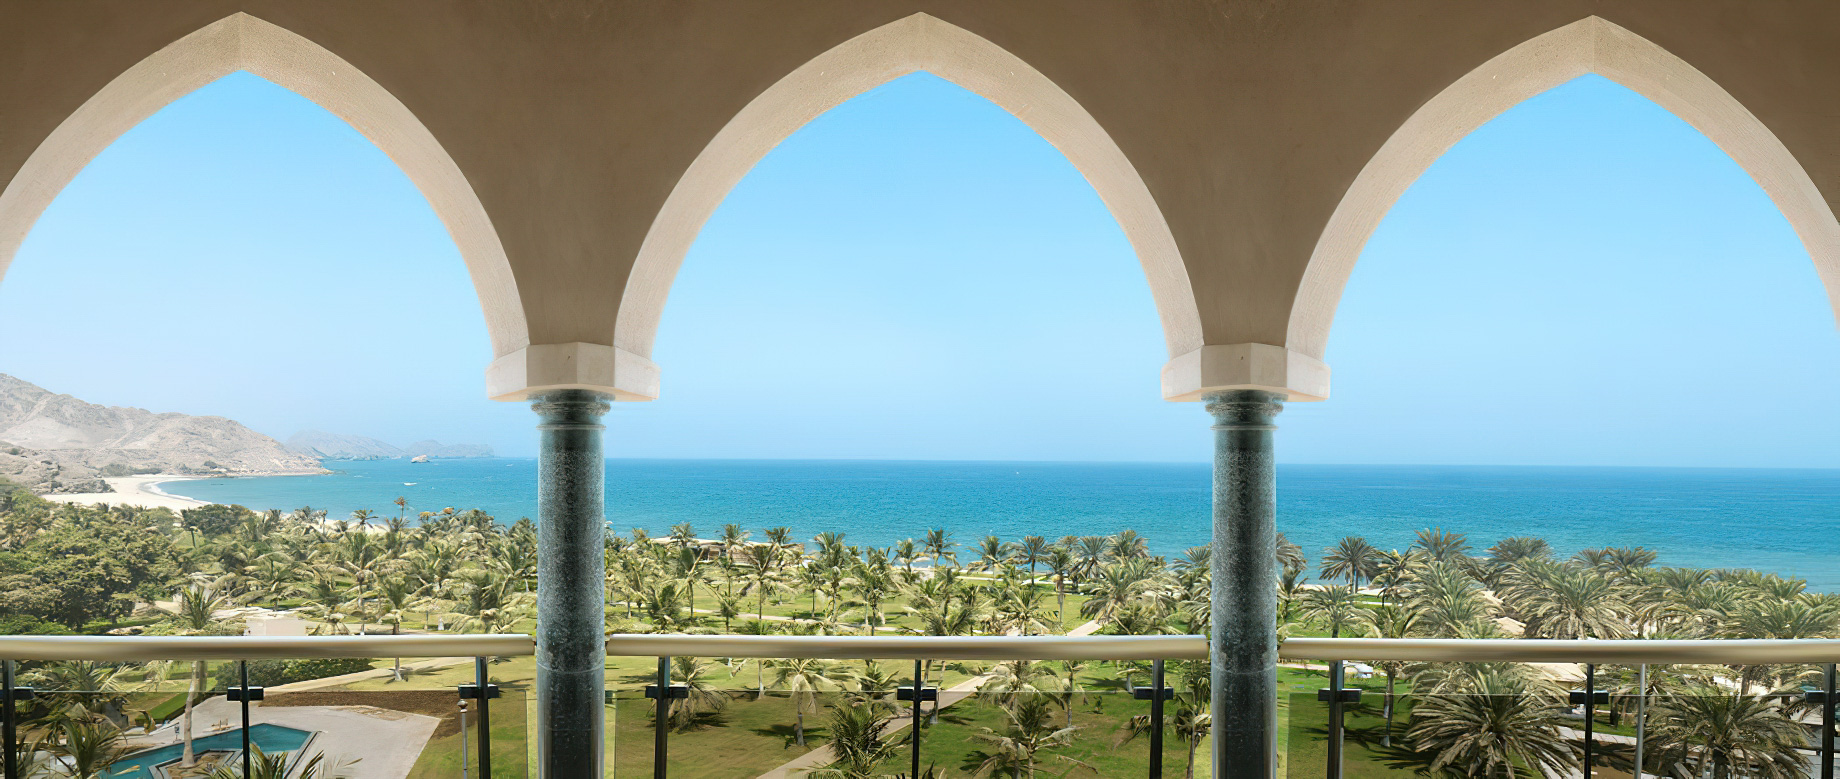 Al Bustan Palace, A Ritz-Carlton Hotel – Muscat, Oman – Executive Suite Sea View Suite Balcony View